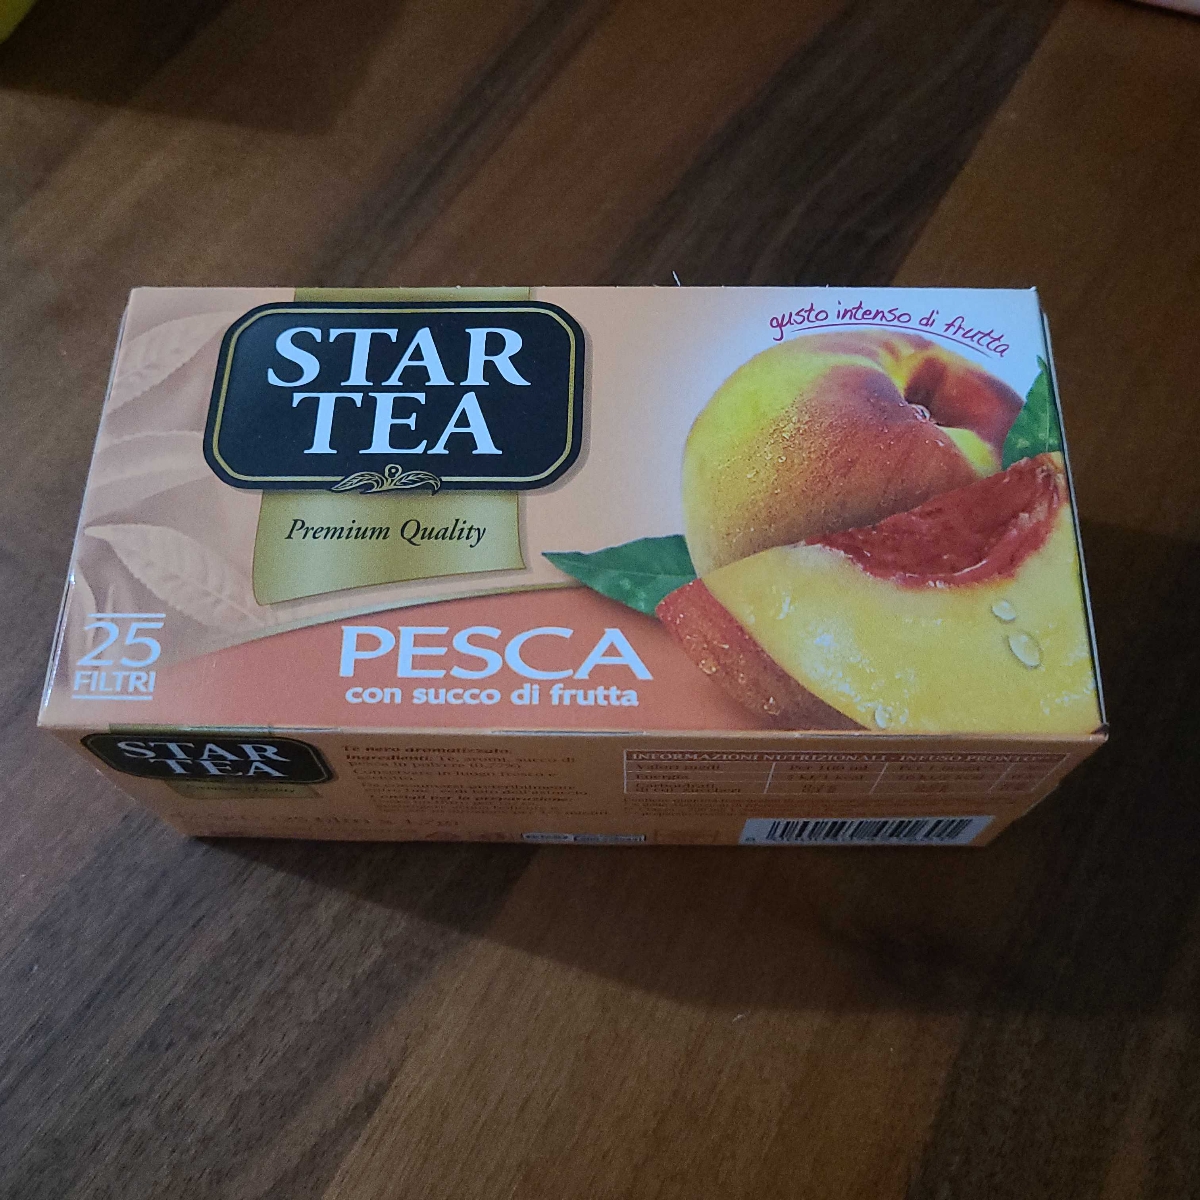 Star tea Tè Alla Pesca Review